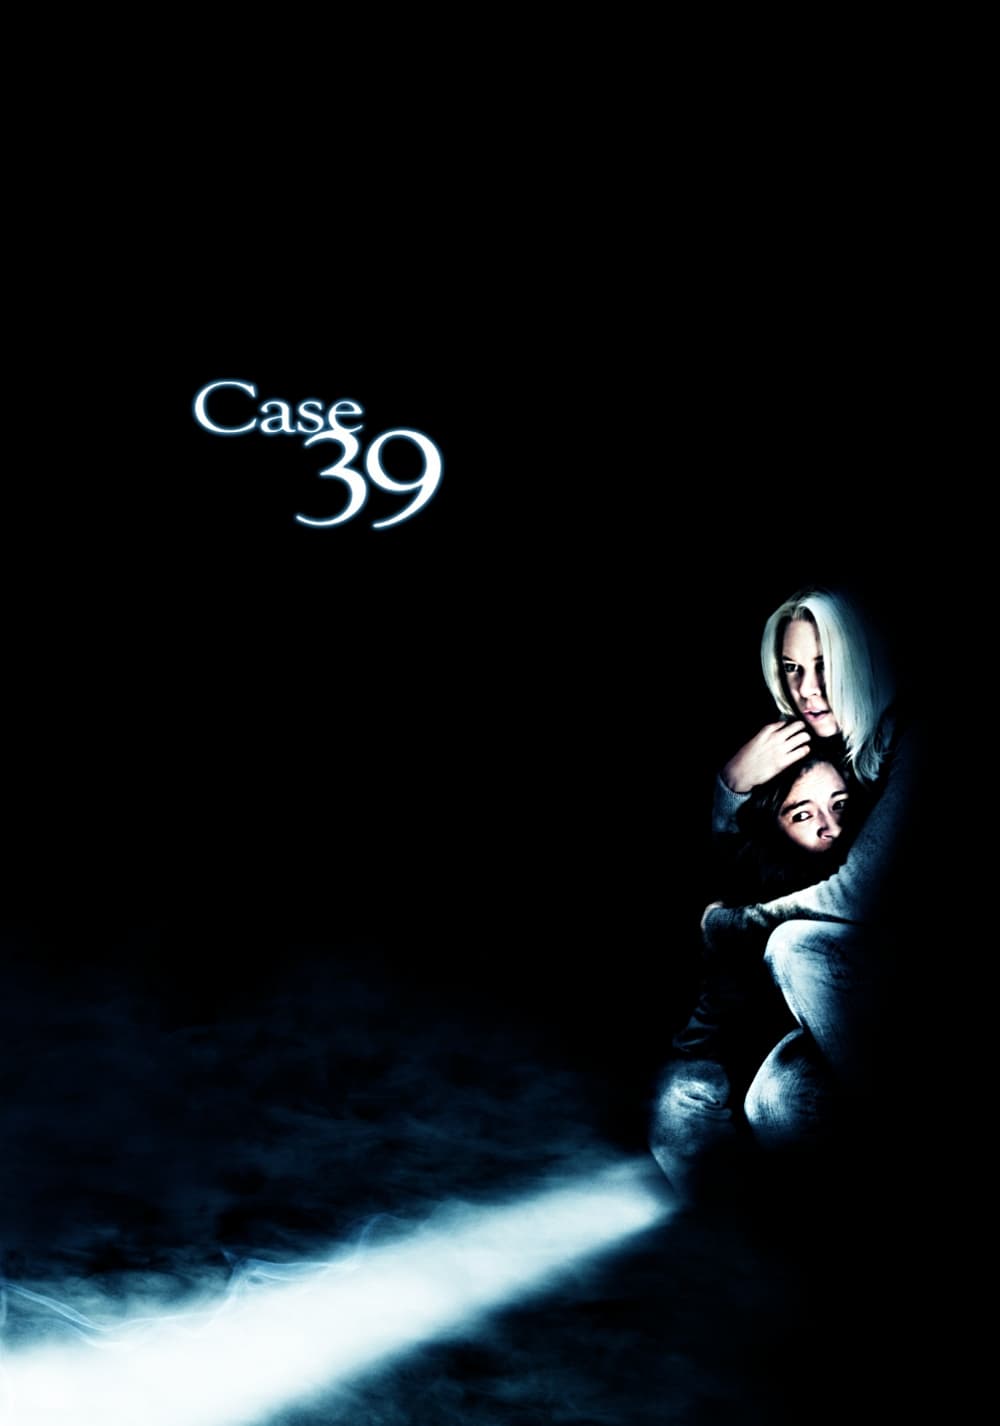 Case 39 Movie poster